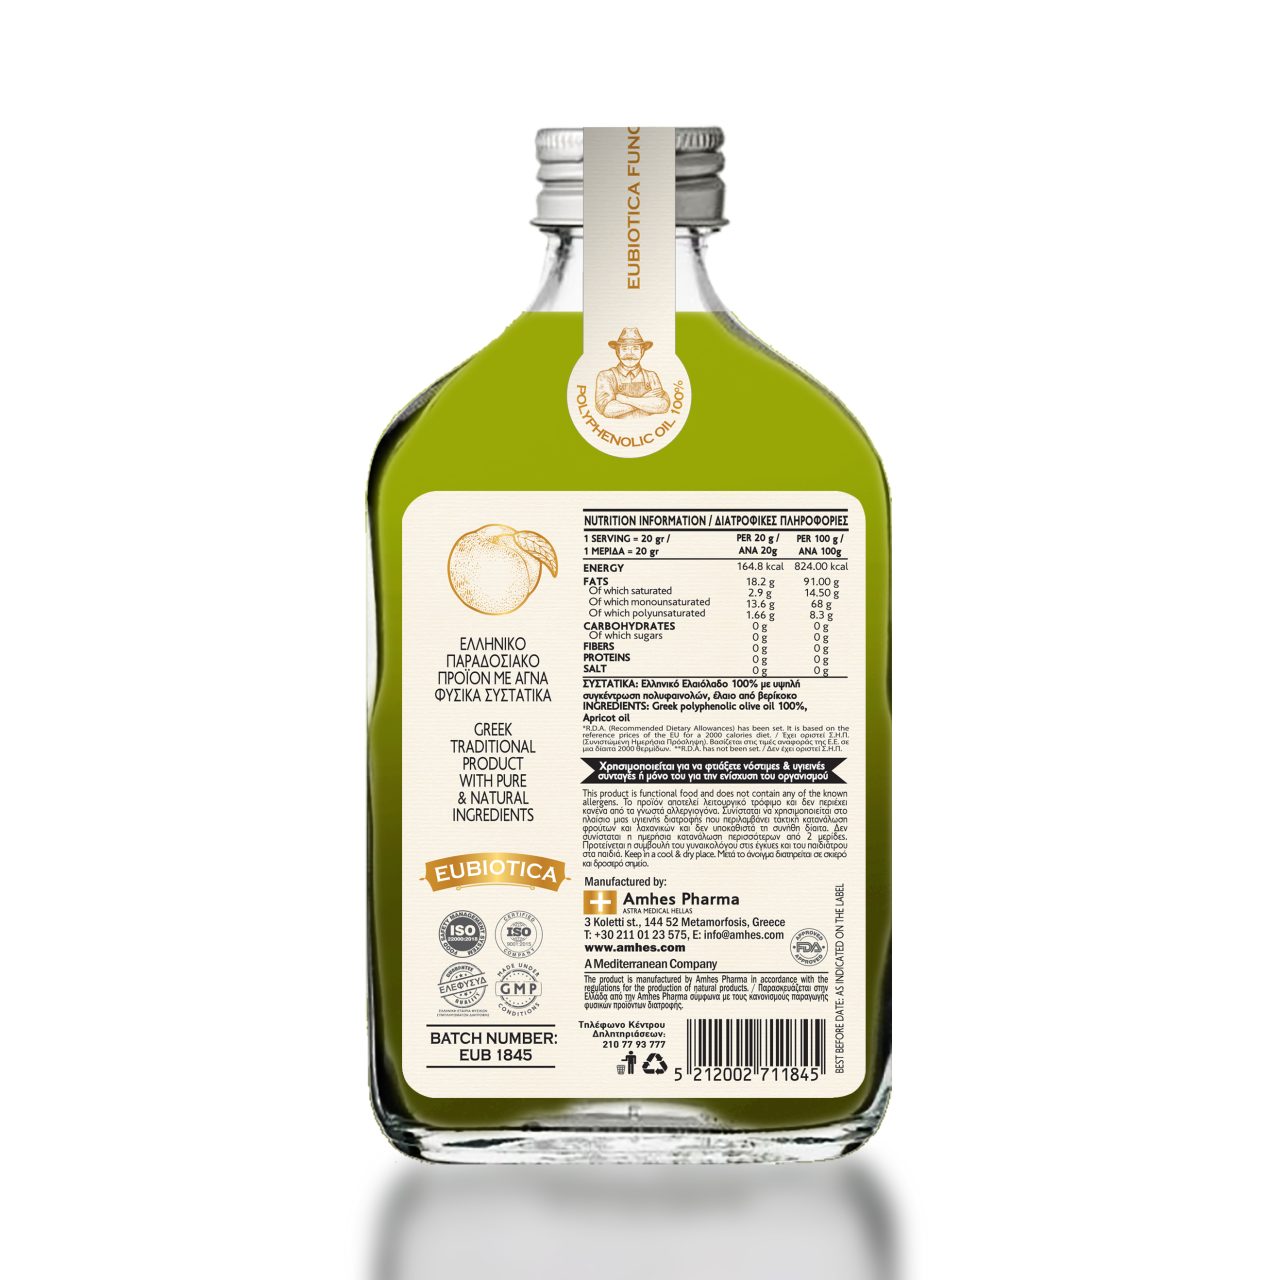 EUBIOTICA olive oil apricot    - Amhes Pharma - Παραγωγη προϊόντων ιδιωτικης ετικετας